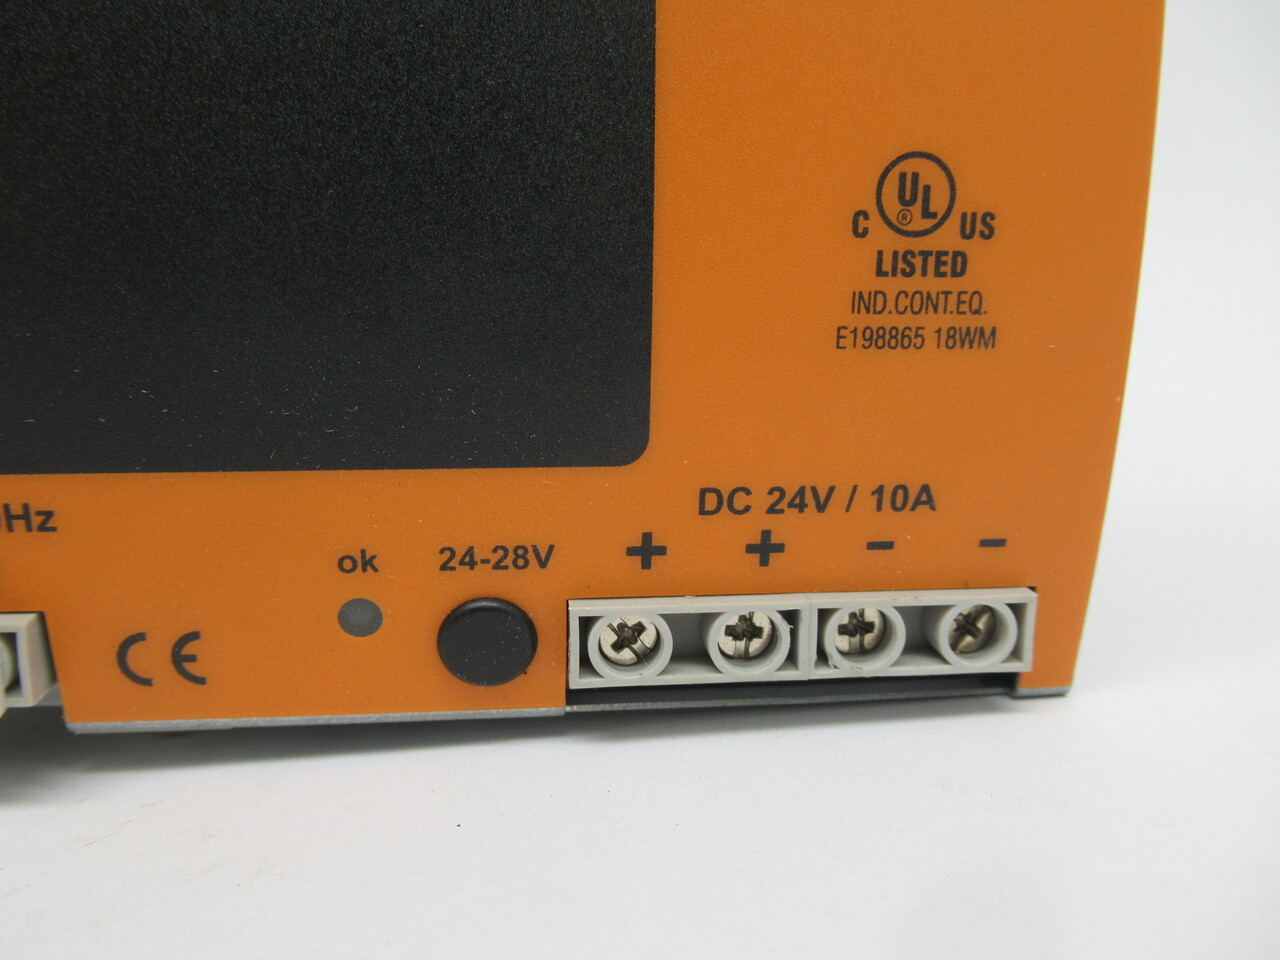 IFM Ecomat200 DN2013 Power Supply AC 115/230V 50/60Hz DC 24V/10A NEW